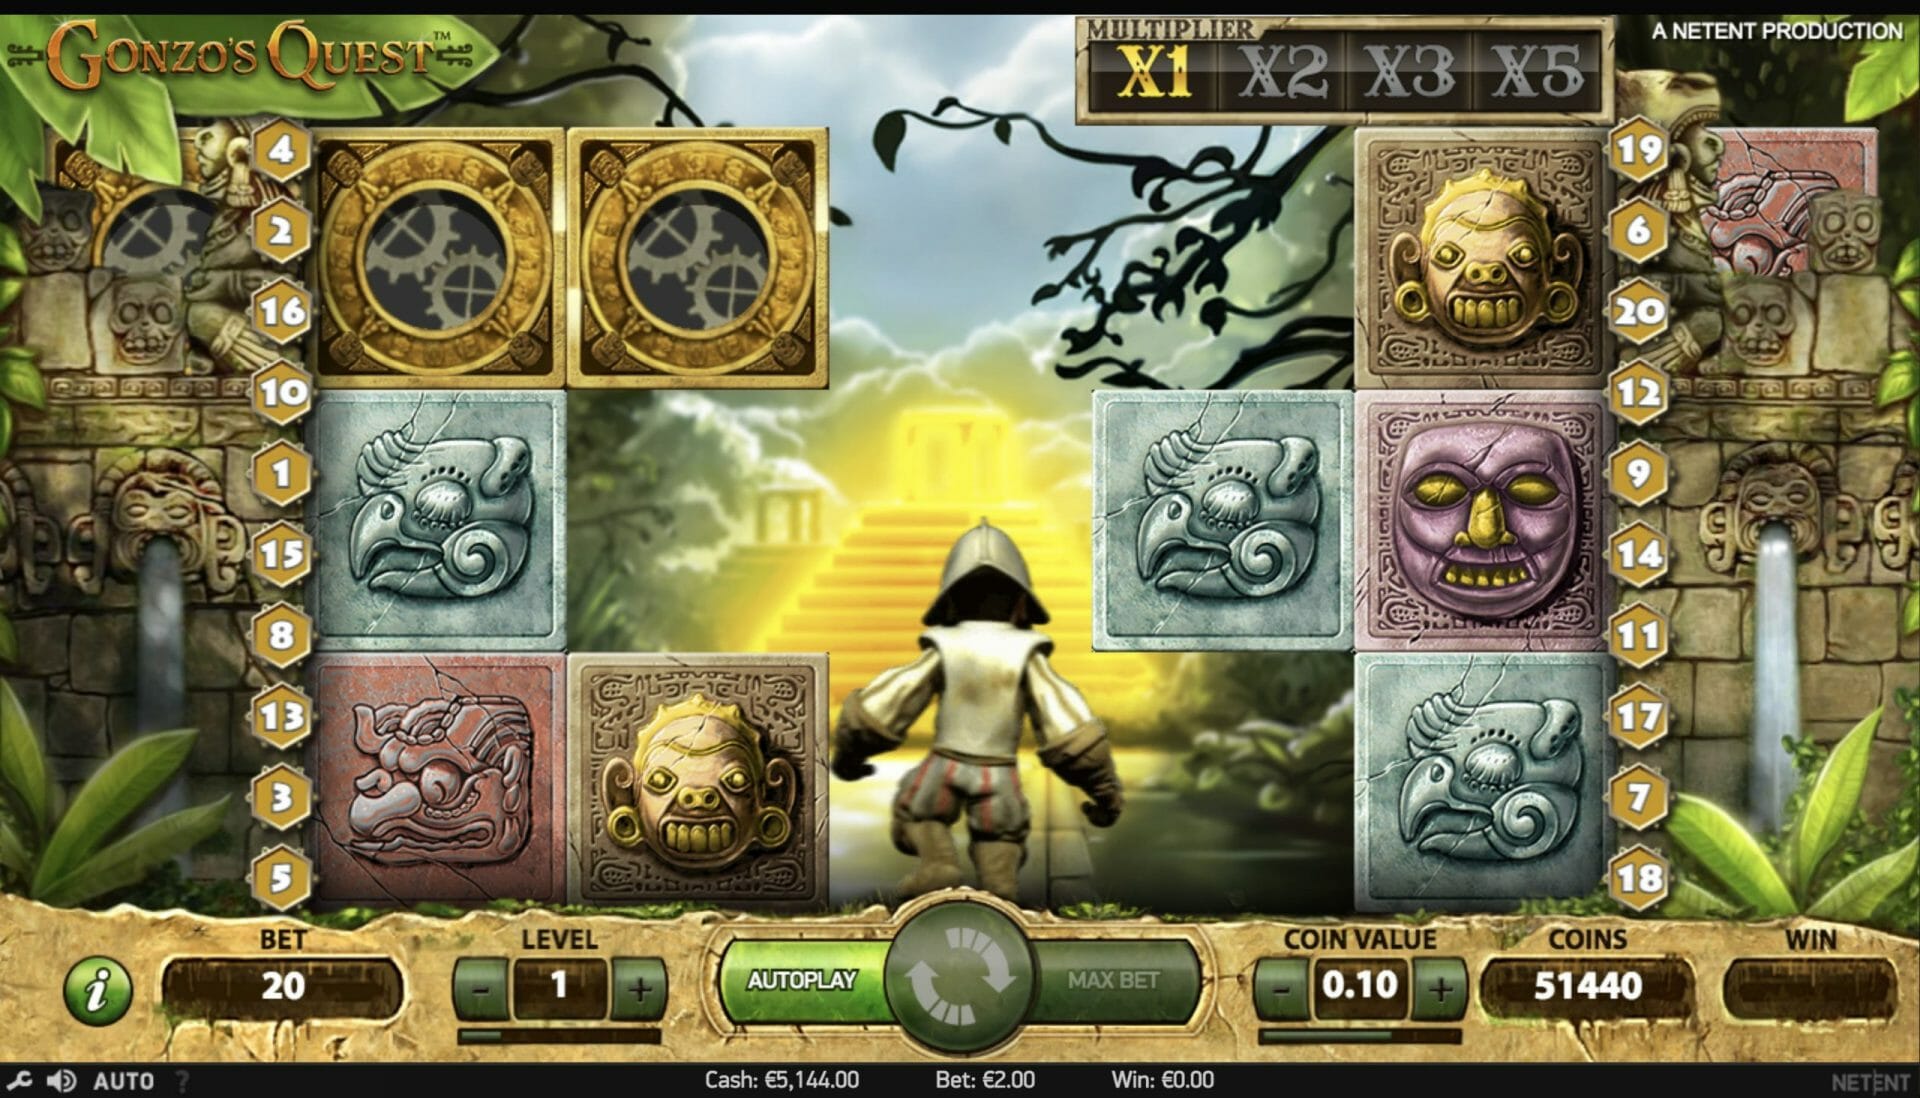 Gonzos Quest Megaways gameplay screenshot